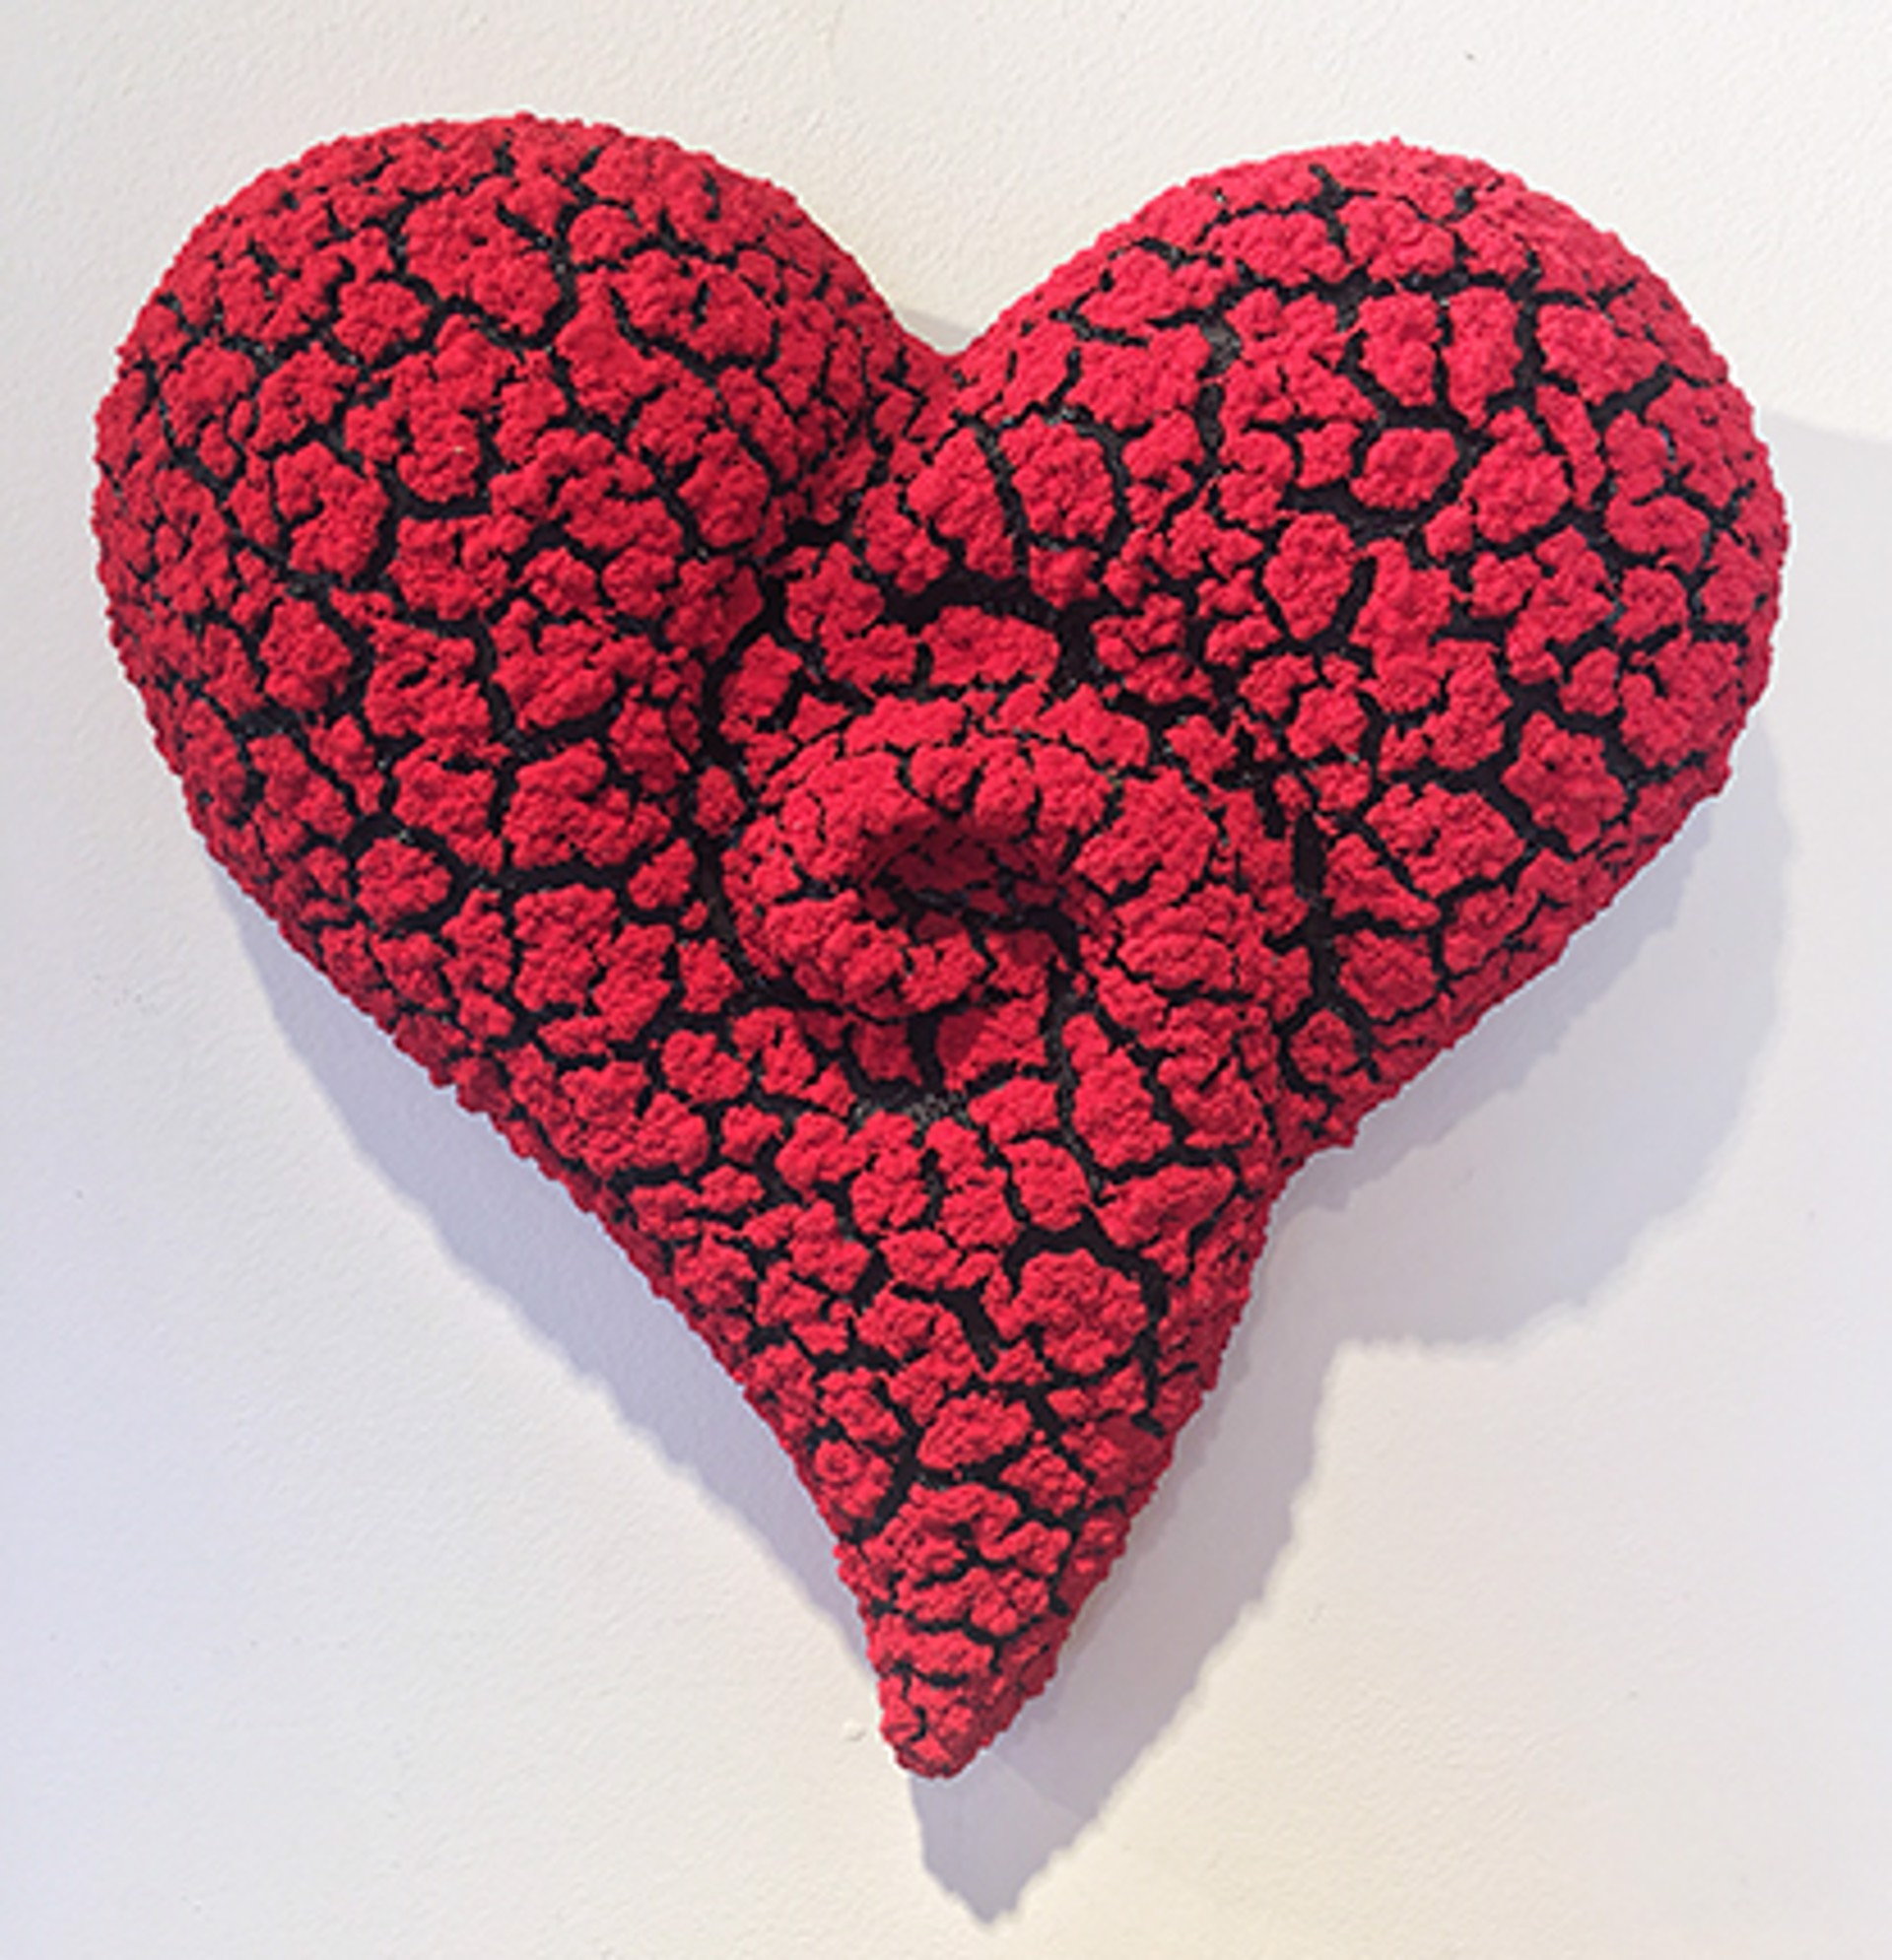 Red Swirled Lichen Heart by Randy O'Brien